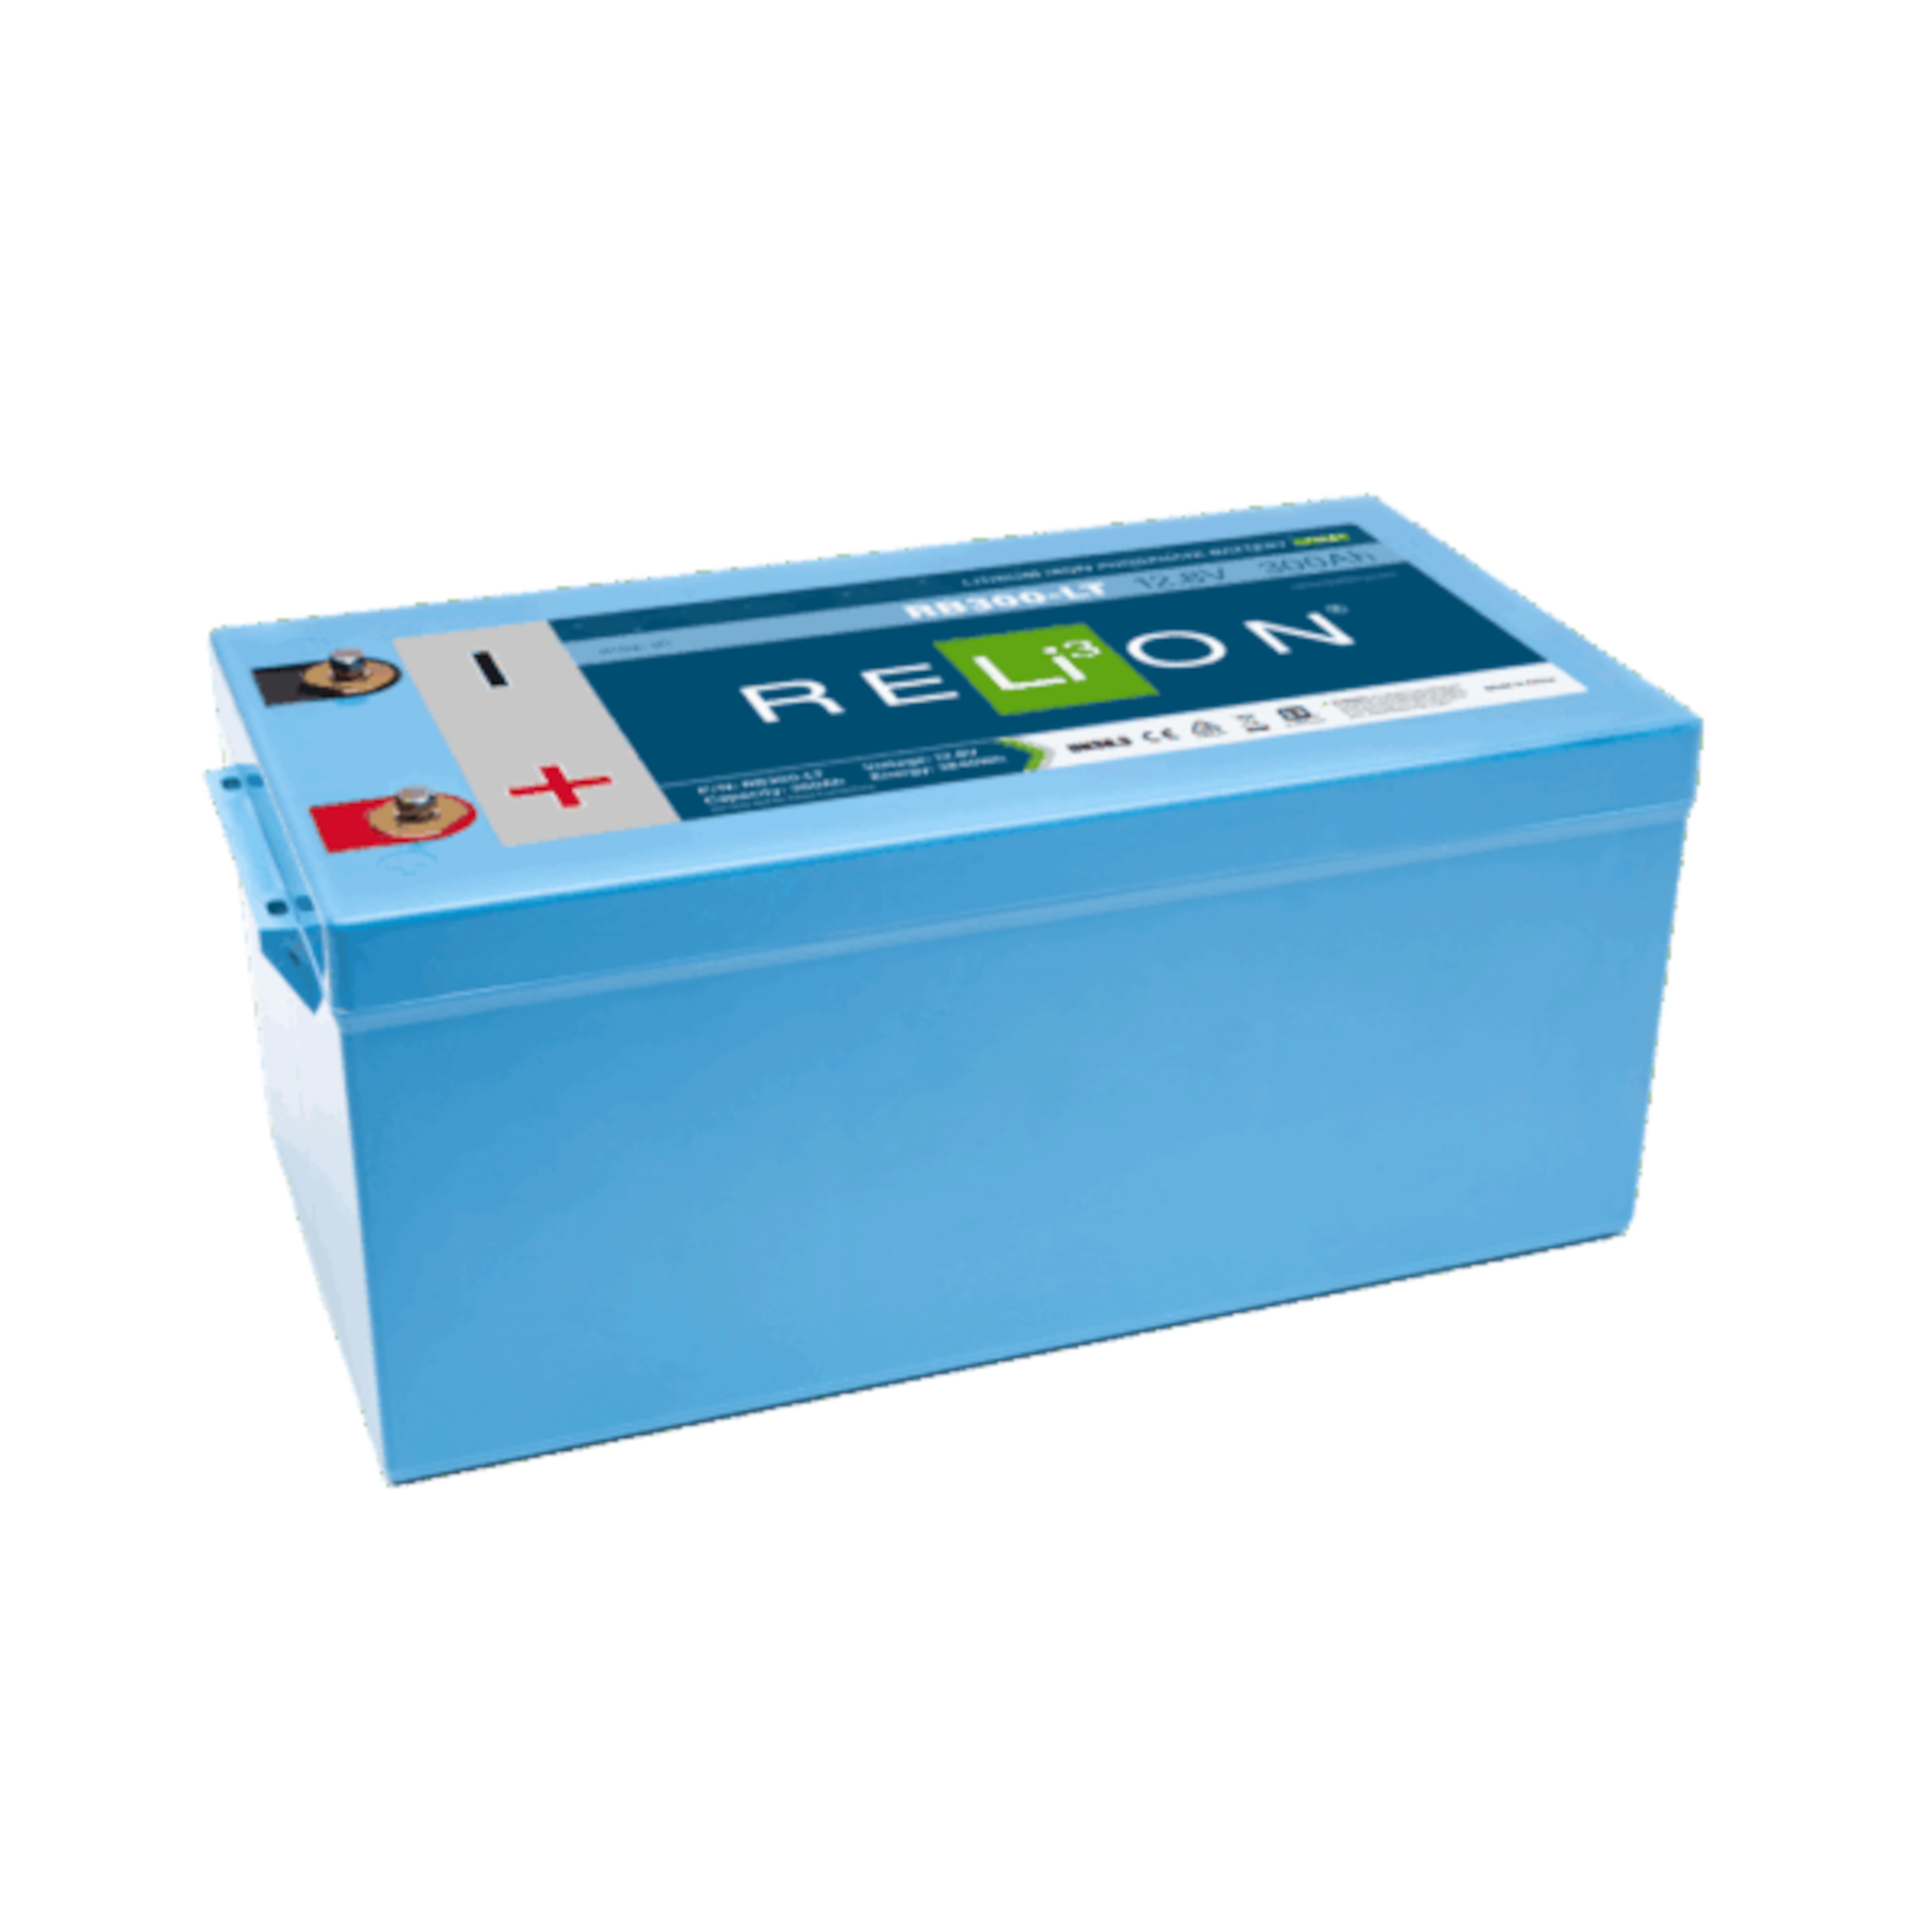 Relion RB300-LT 12V LiFePO4 Lithium Deep Cycle Battery